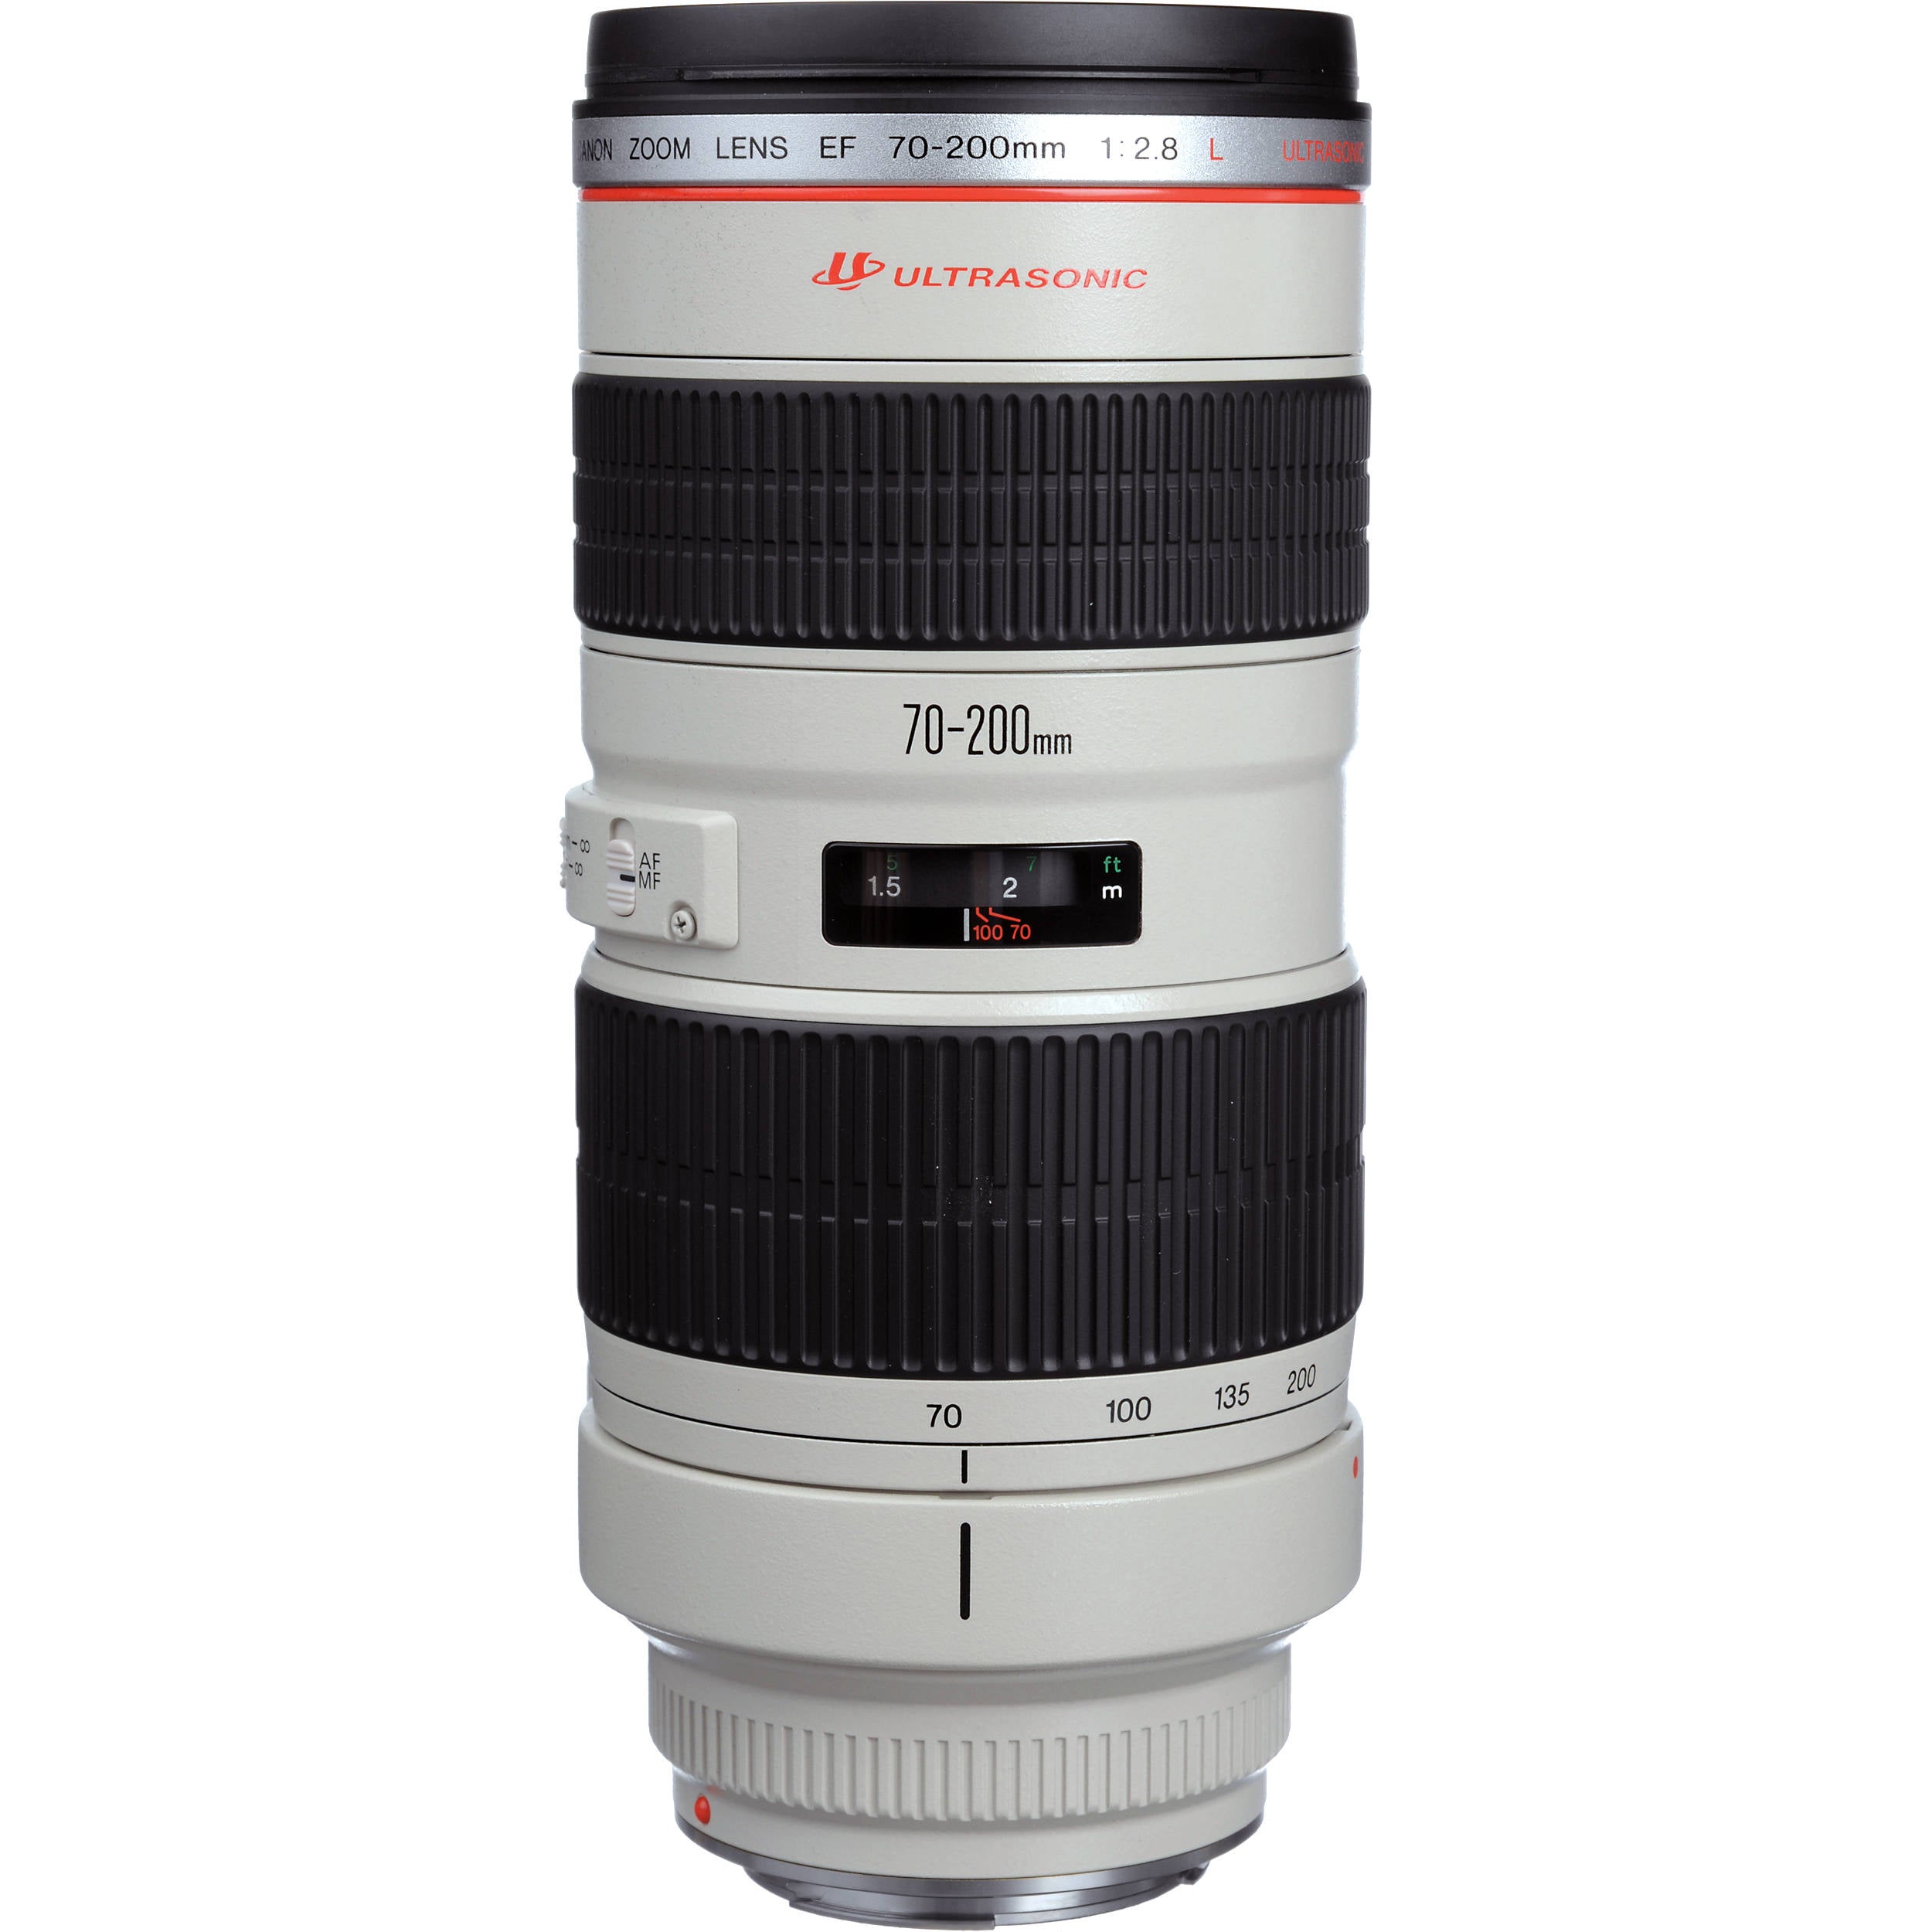 USED Canon EF 70-200mm f/2.8 L USM Lens - Rating 7/10 (S39513)